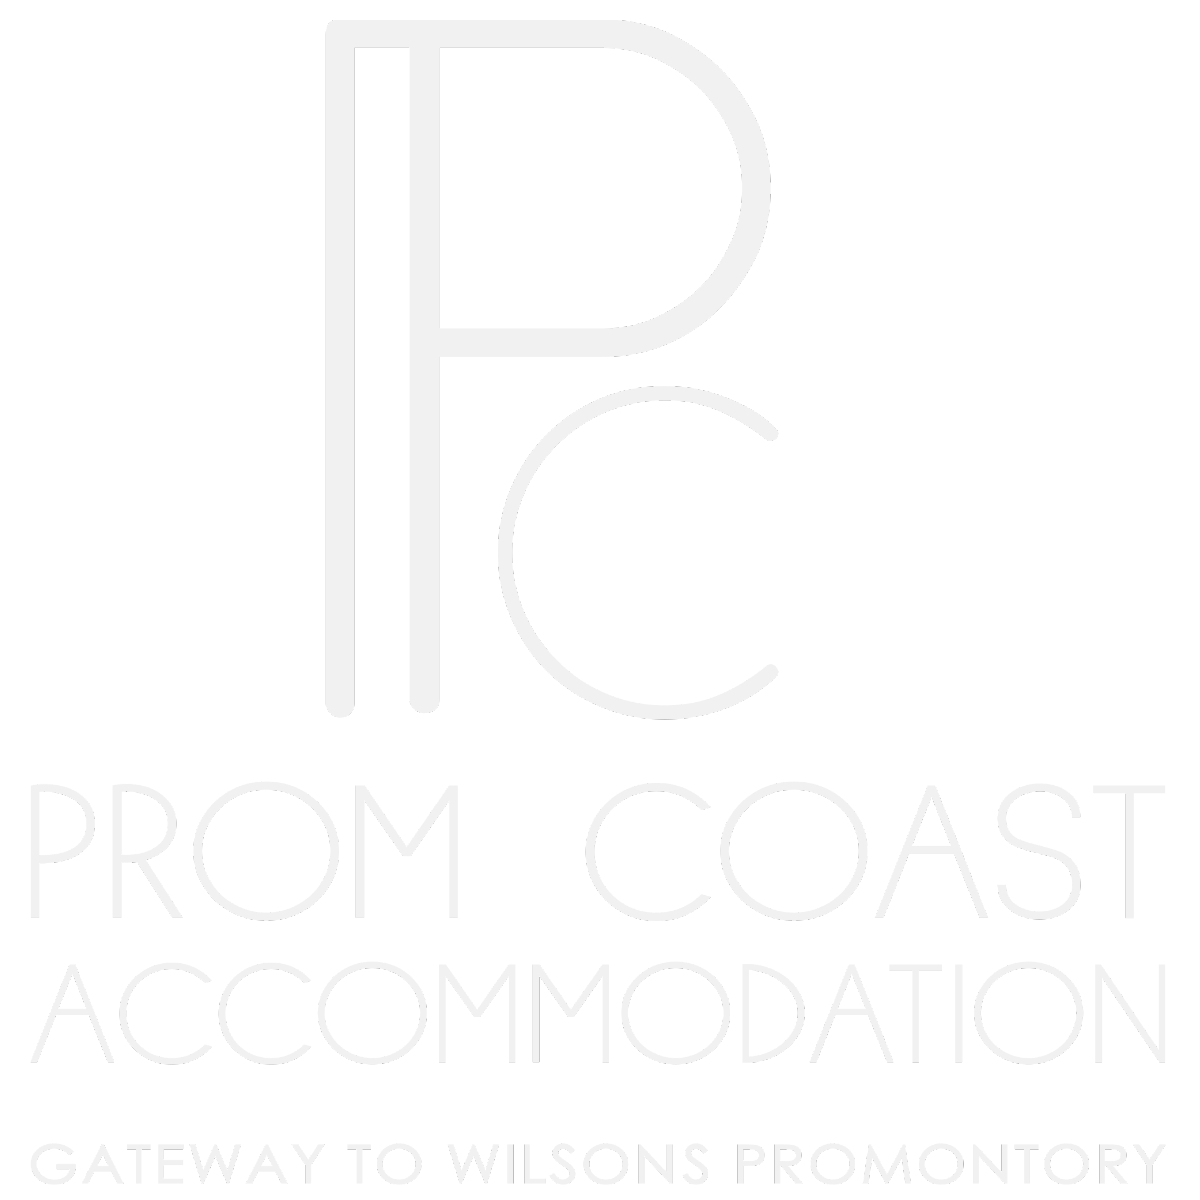 Prom Coast Accommodation